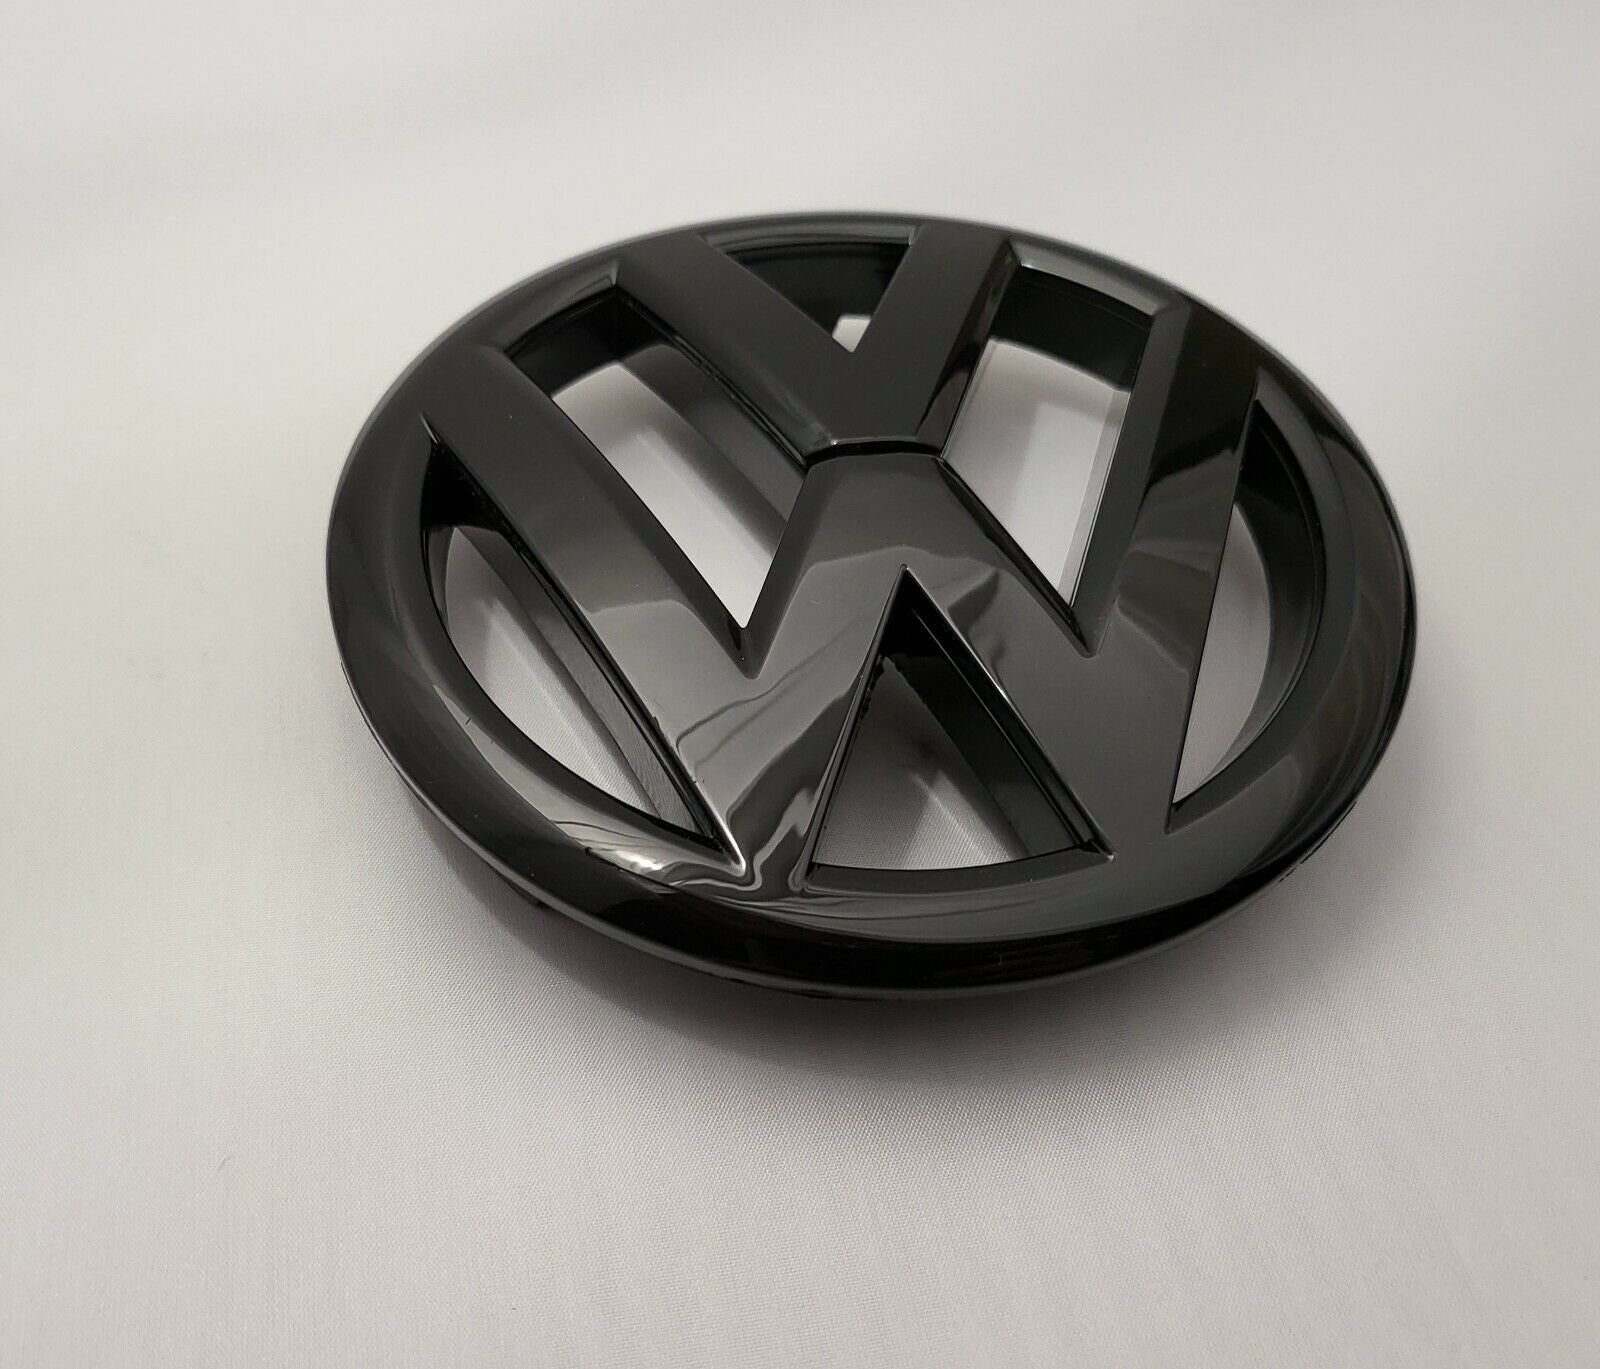 VW Golf 7 VII Facelift Front Emblem Schwarz Black Zeichen GTI GTD R-Line  TCR ACC